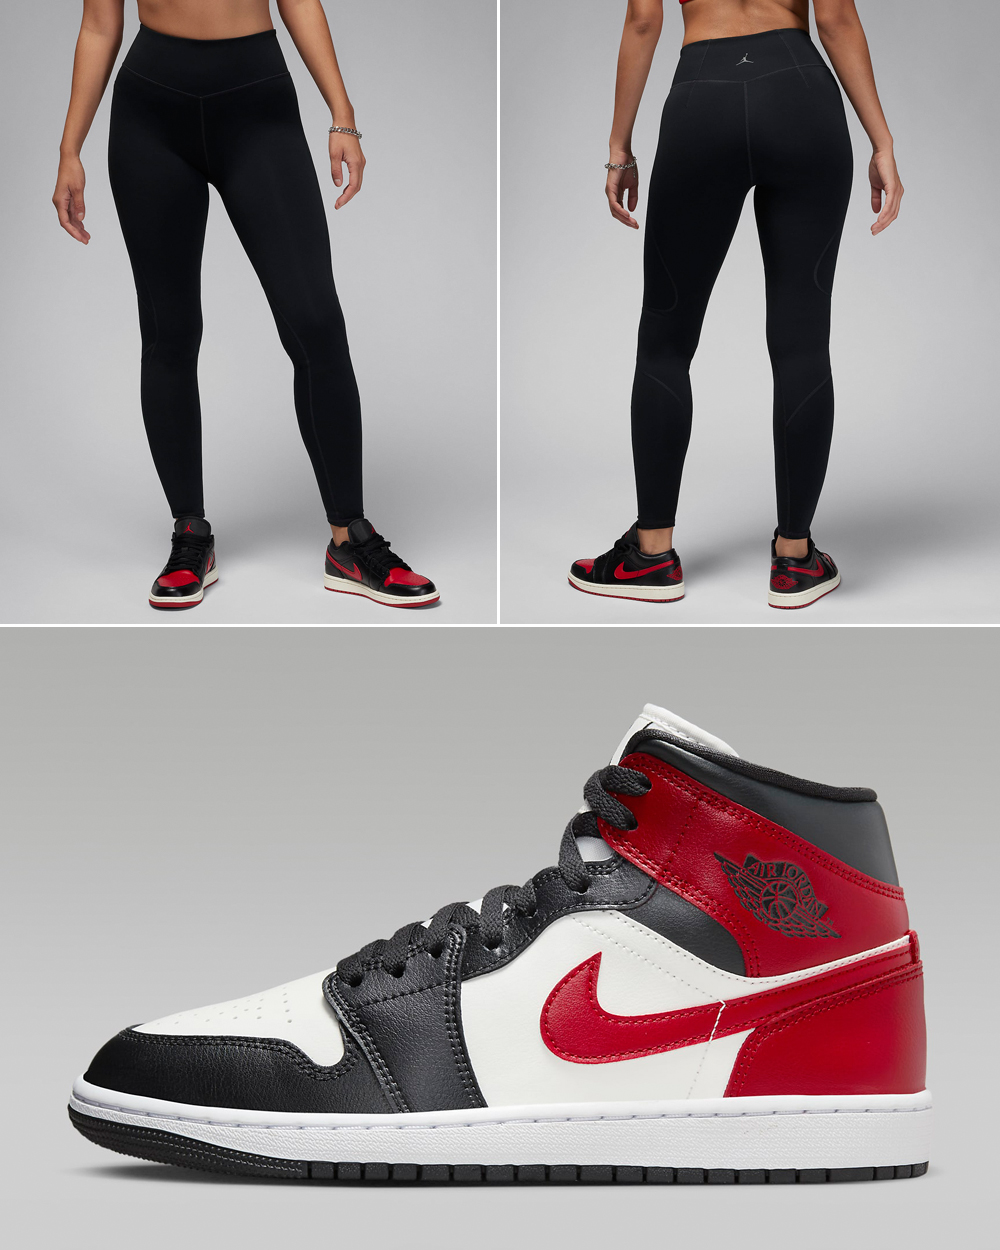 Air-Jordan-1-Mid-Womens-Sail-Off-Noir-Gym-Red-Leggings-Outfit